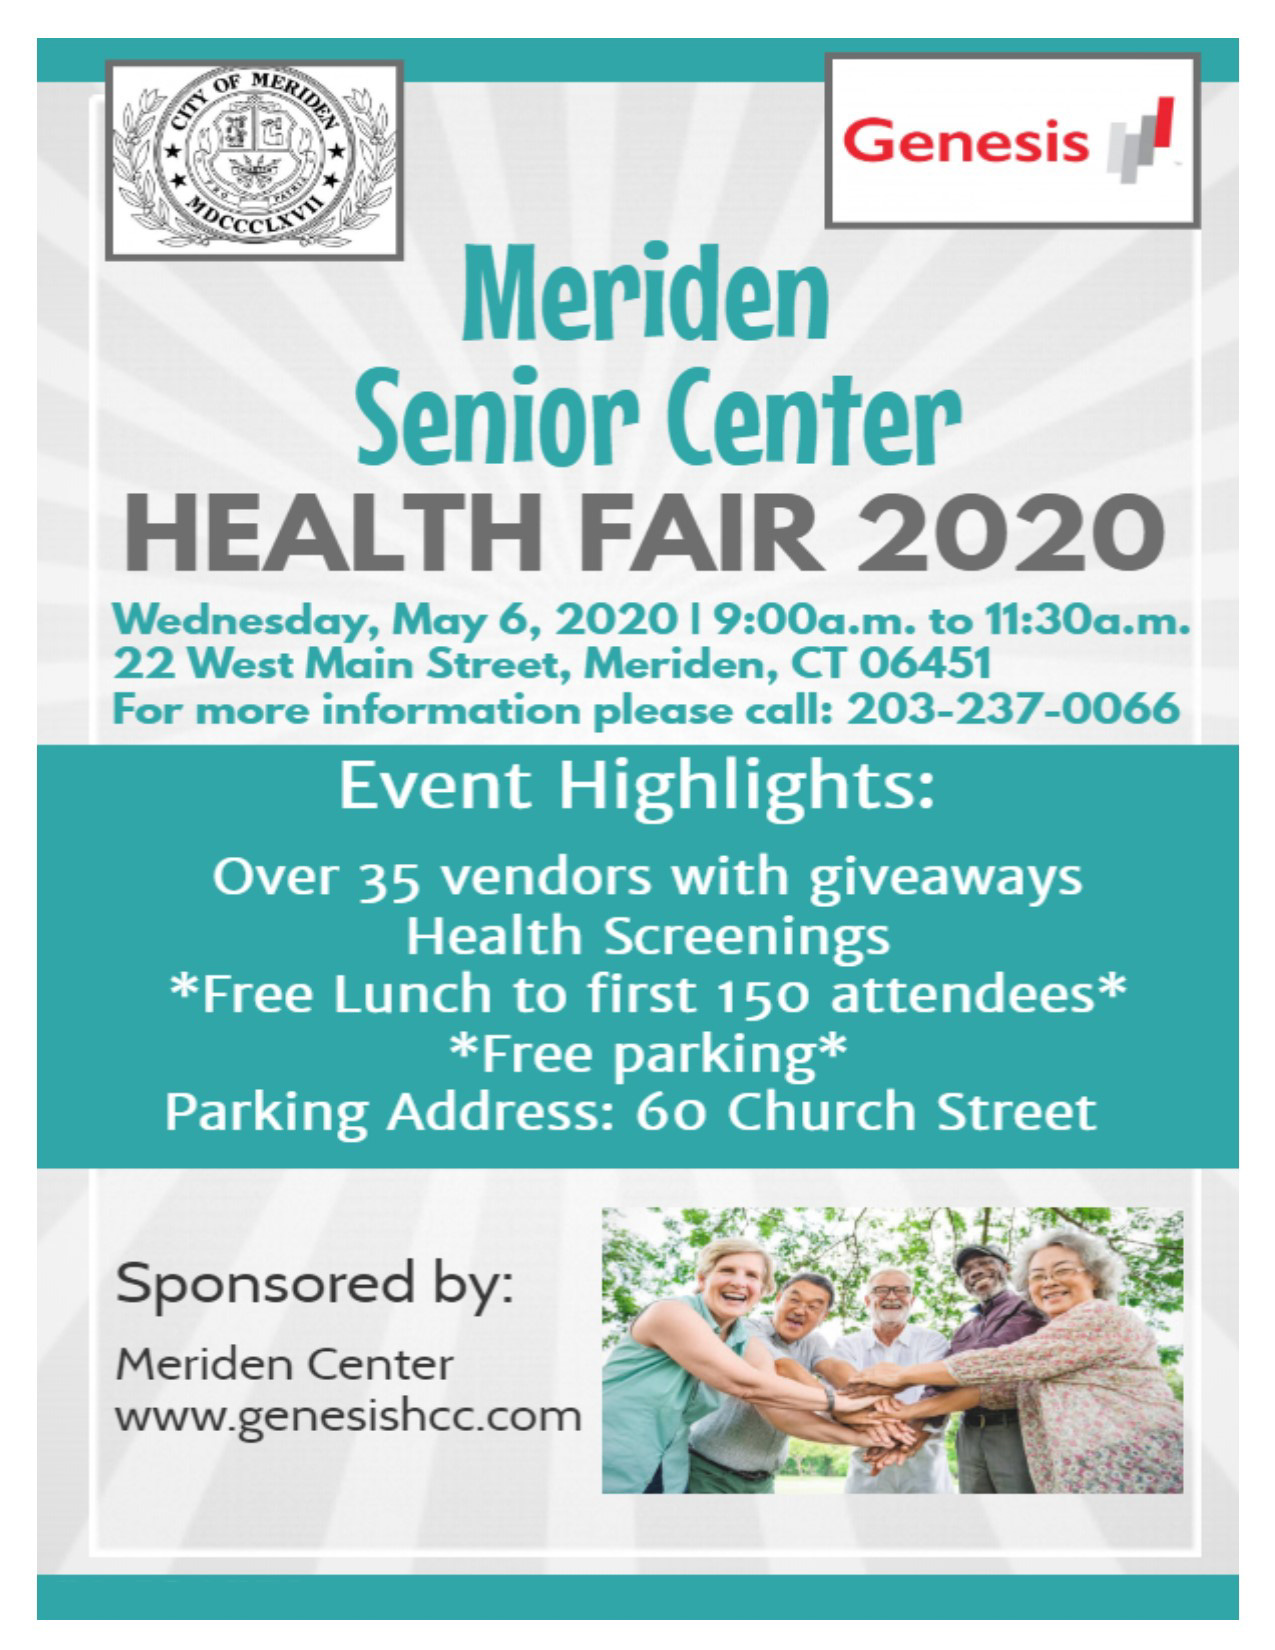 Meriden Senior Center Health Fair 2020